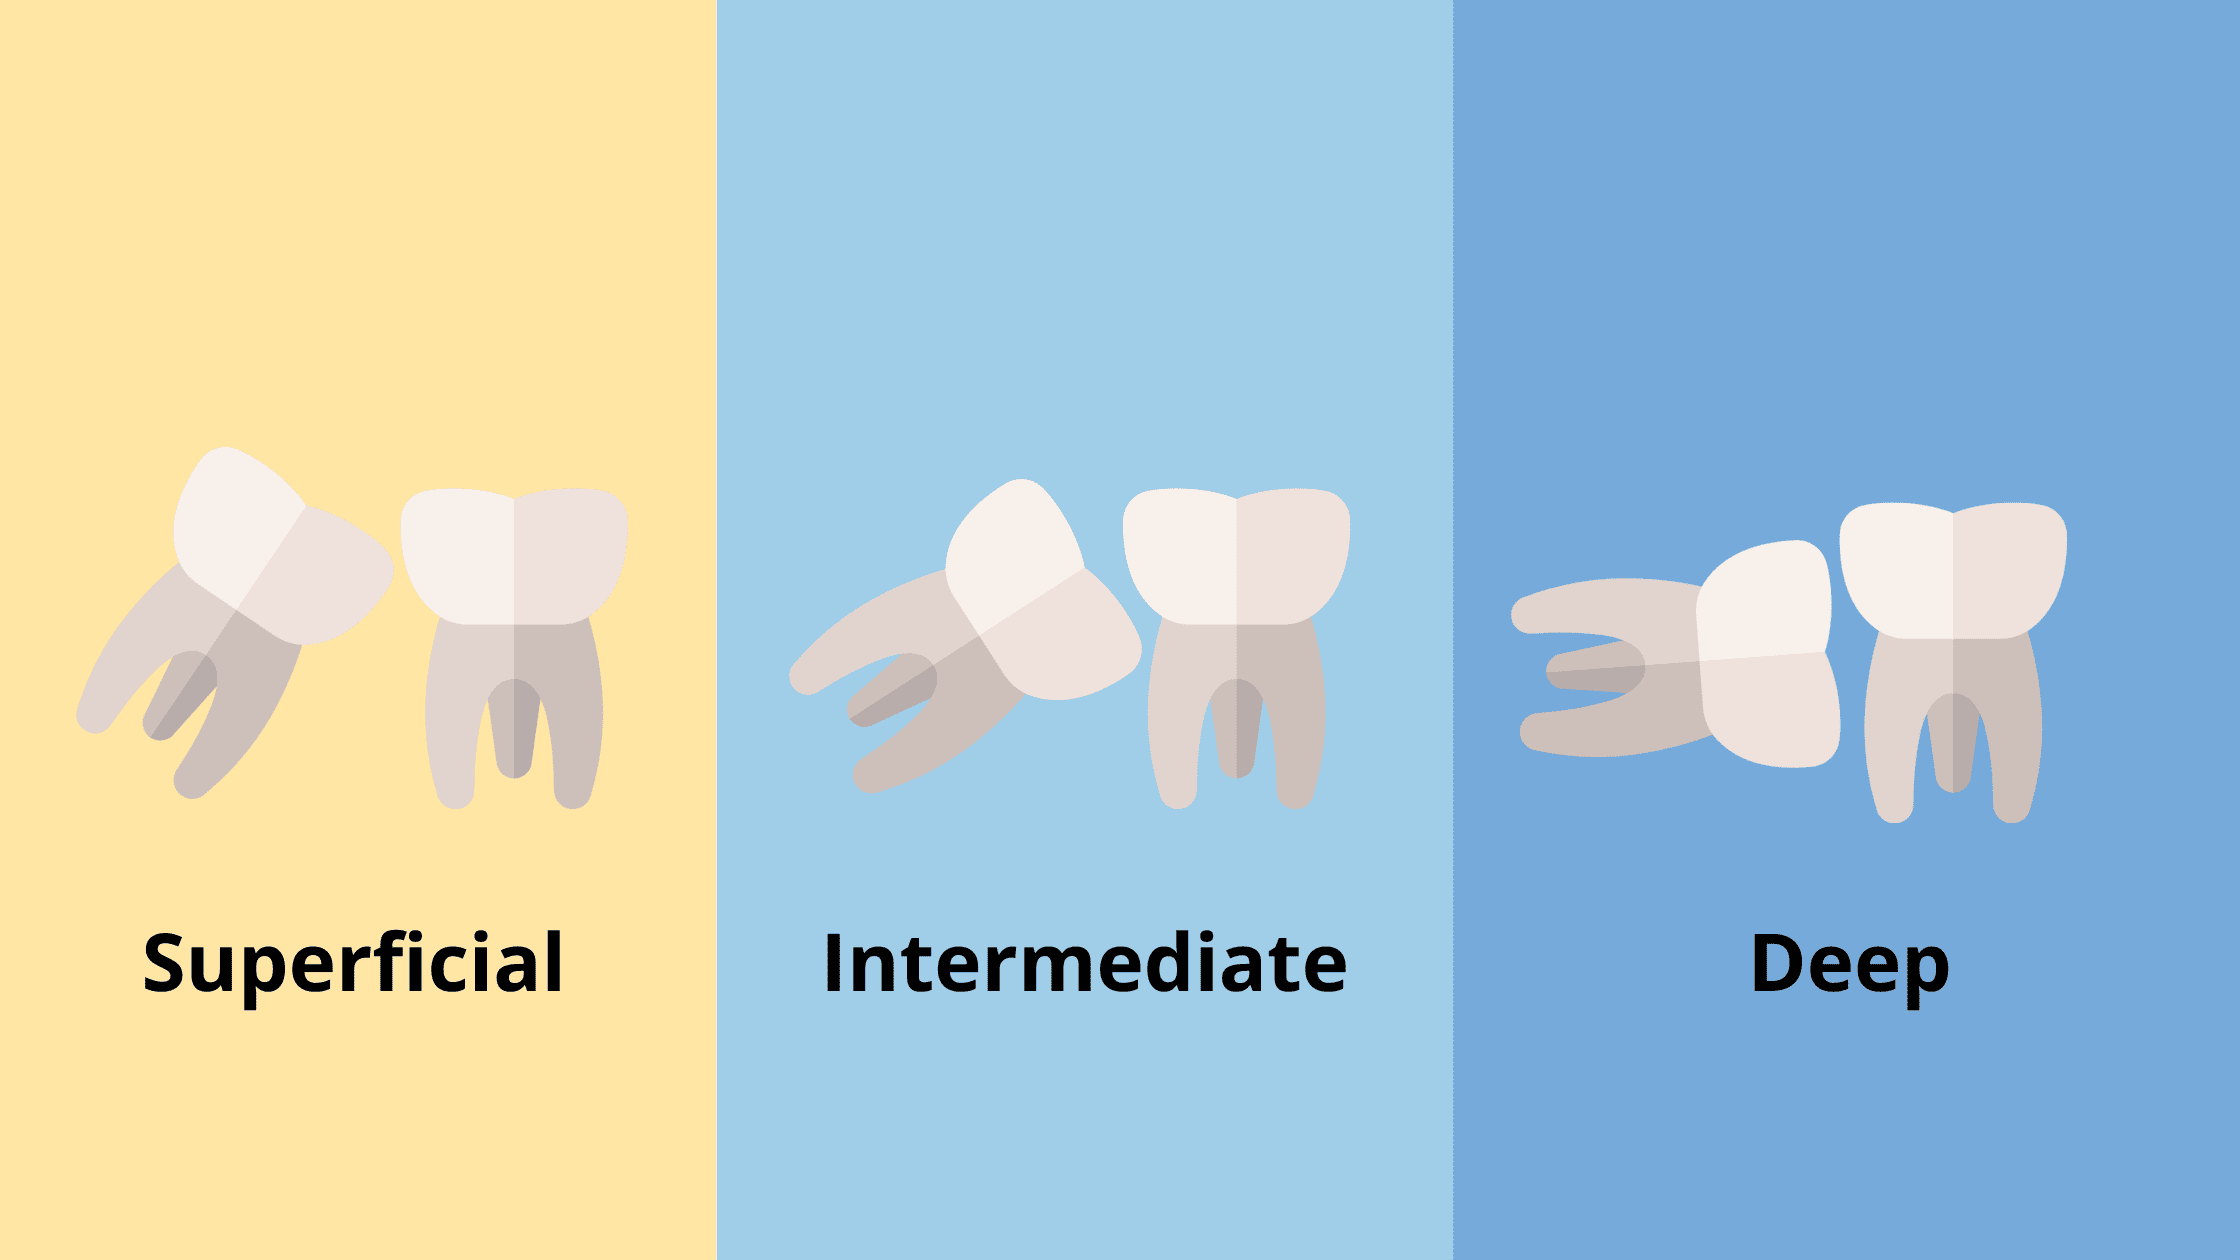 impaction depth of wisdom teeth